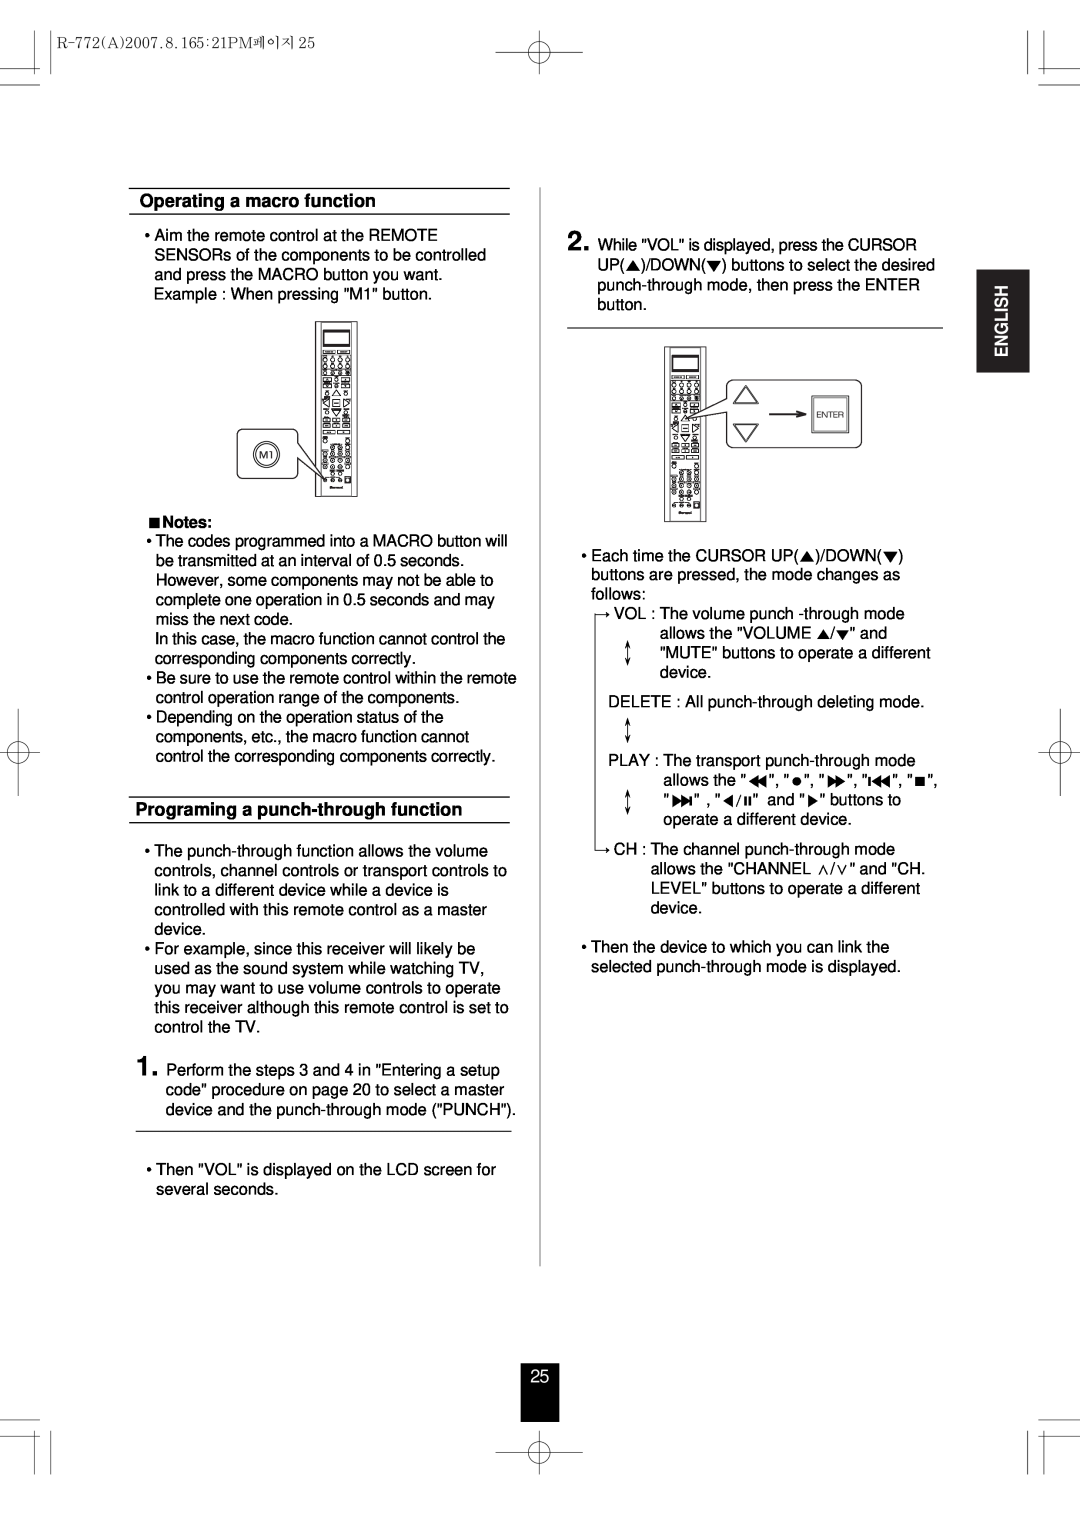 Sherwood R-772 manual Operating a macro function, Programing a punch-throughfunction, Notes, English 